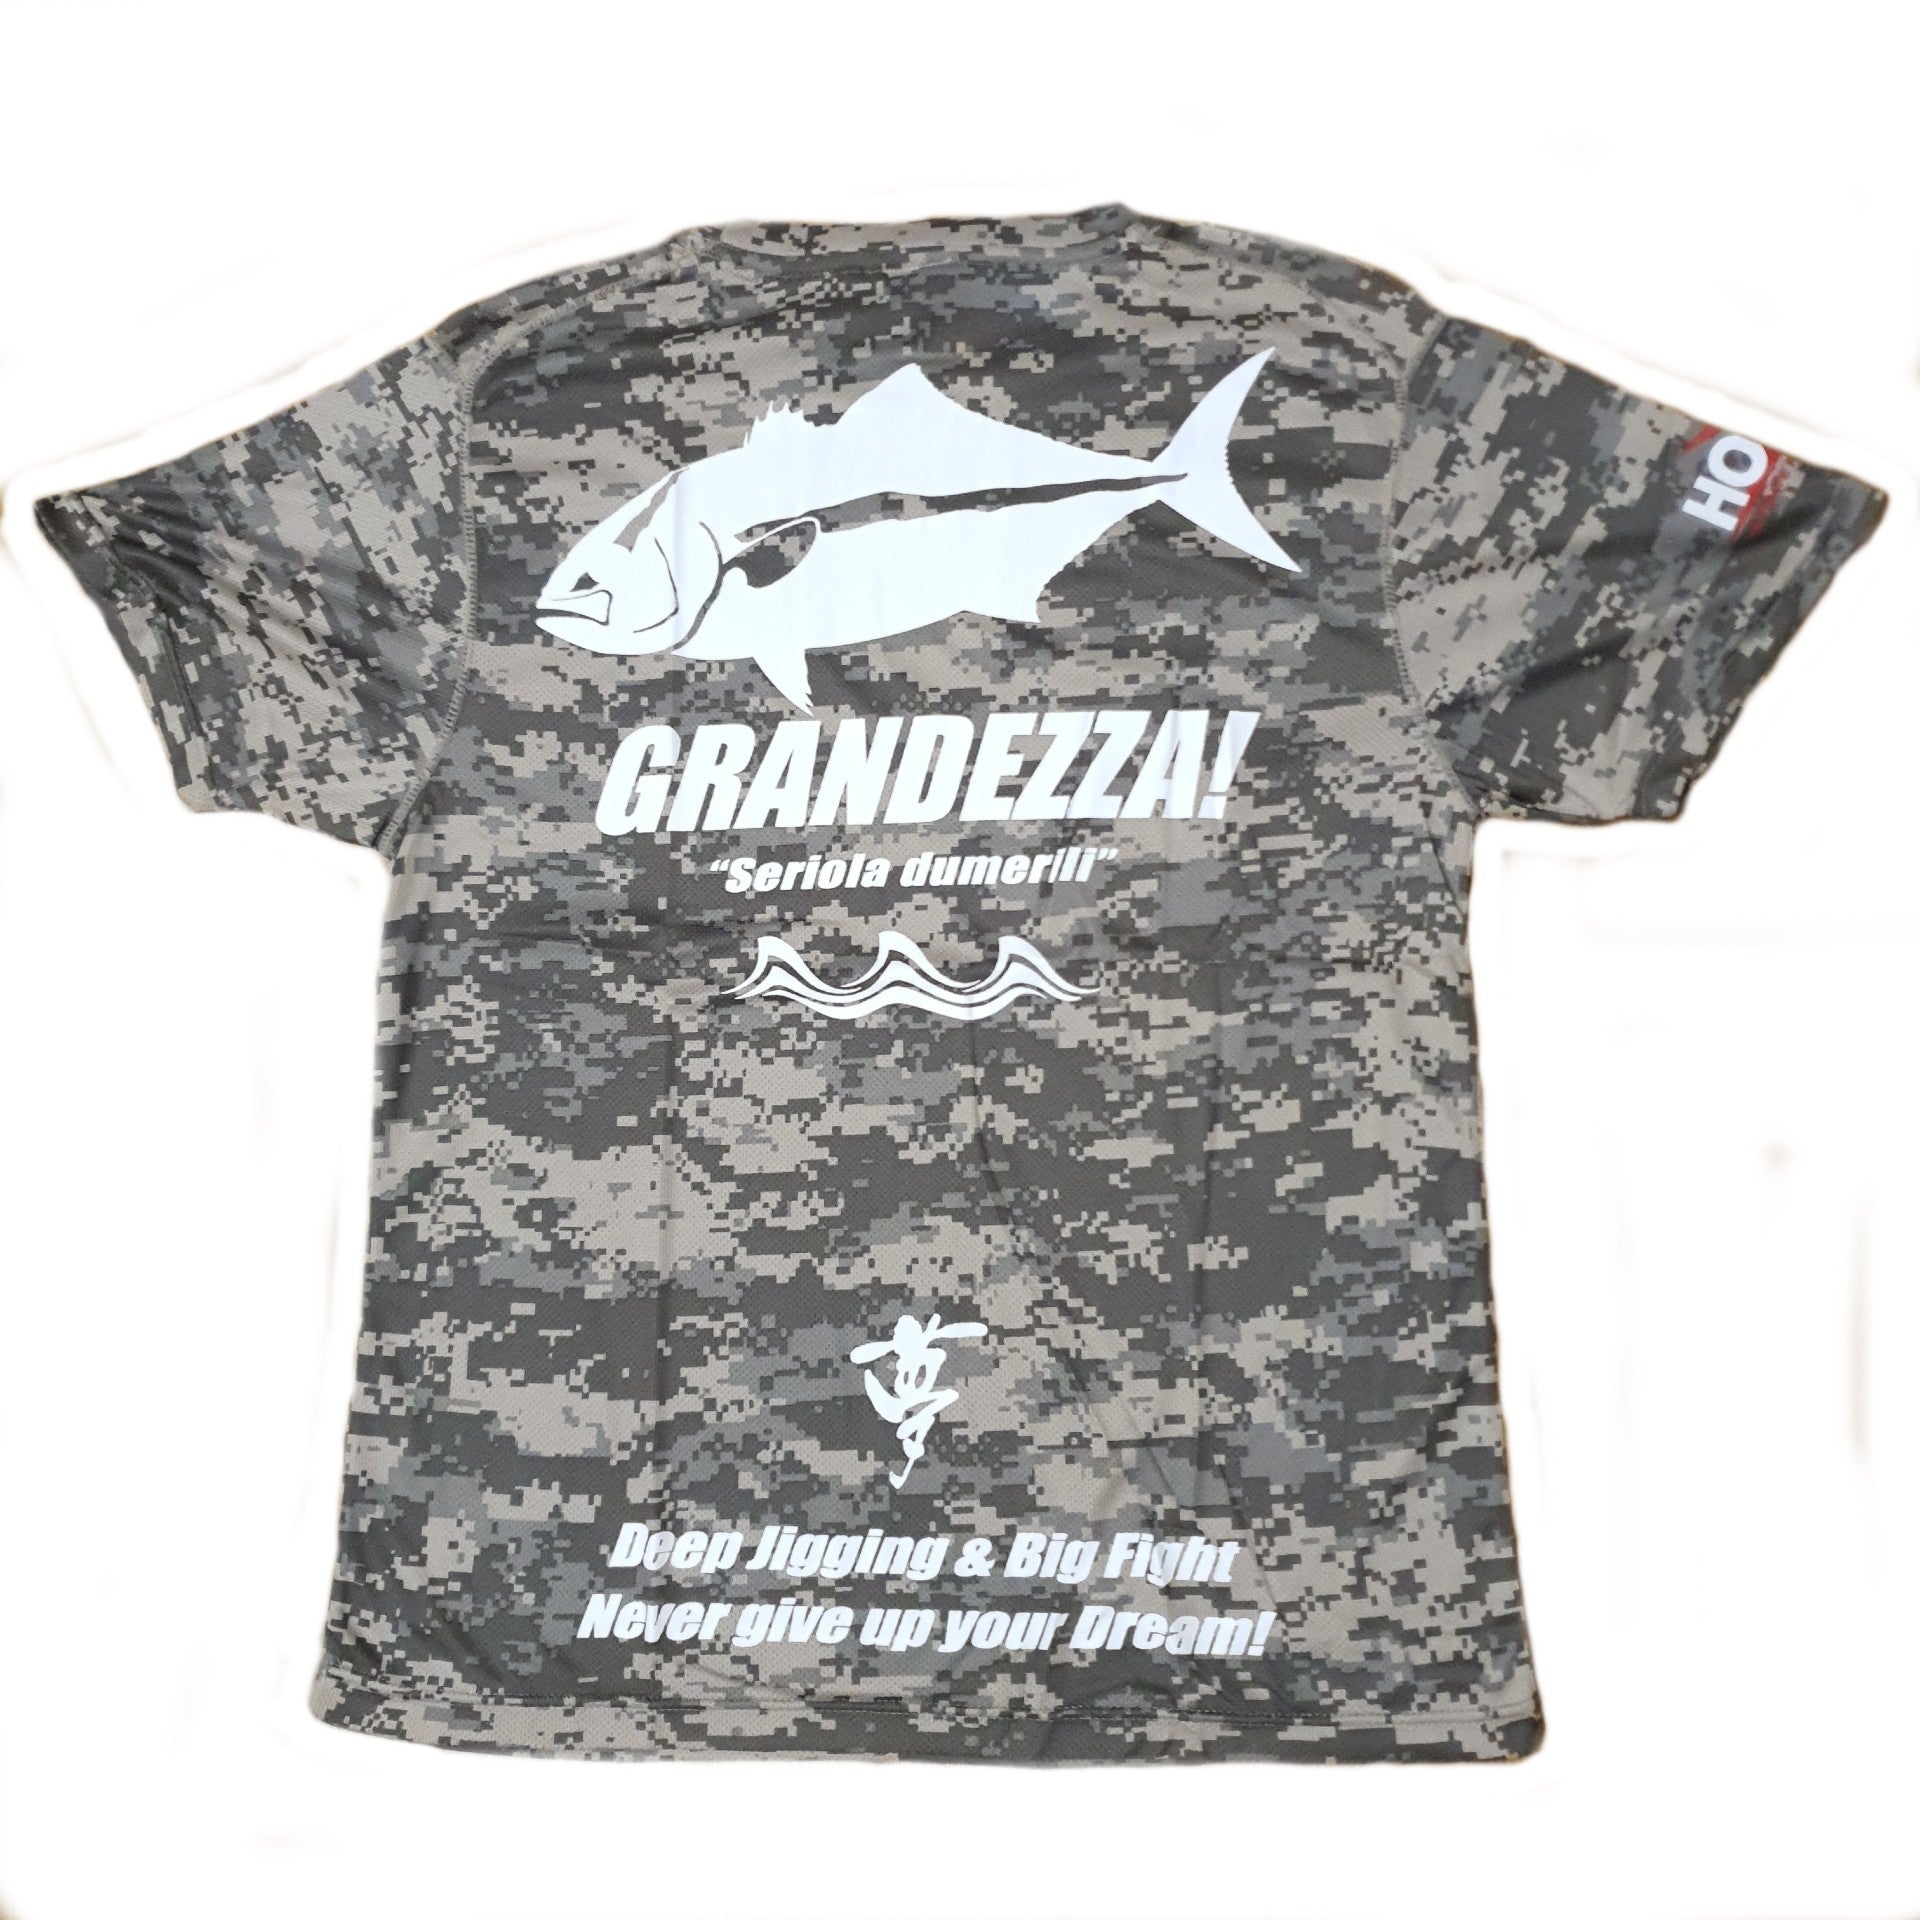 Tmarc Tee Northern Pike fishing underwater Yinyang camo d print shirts -  Sweat Shirt / XXL